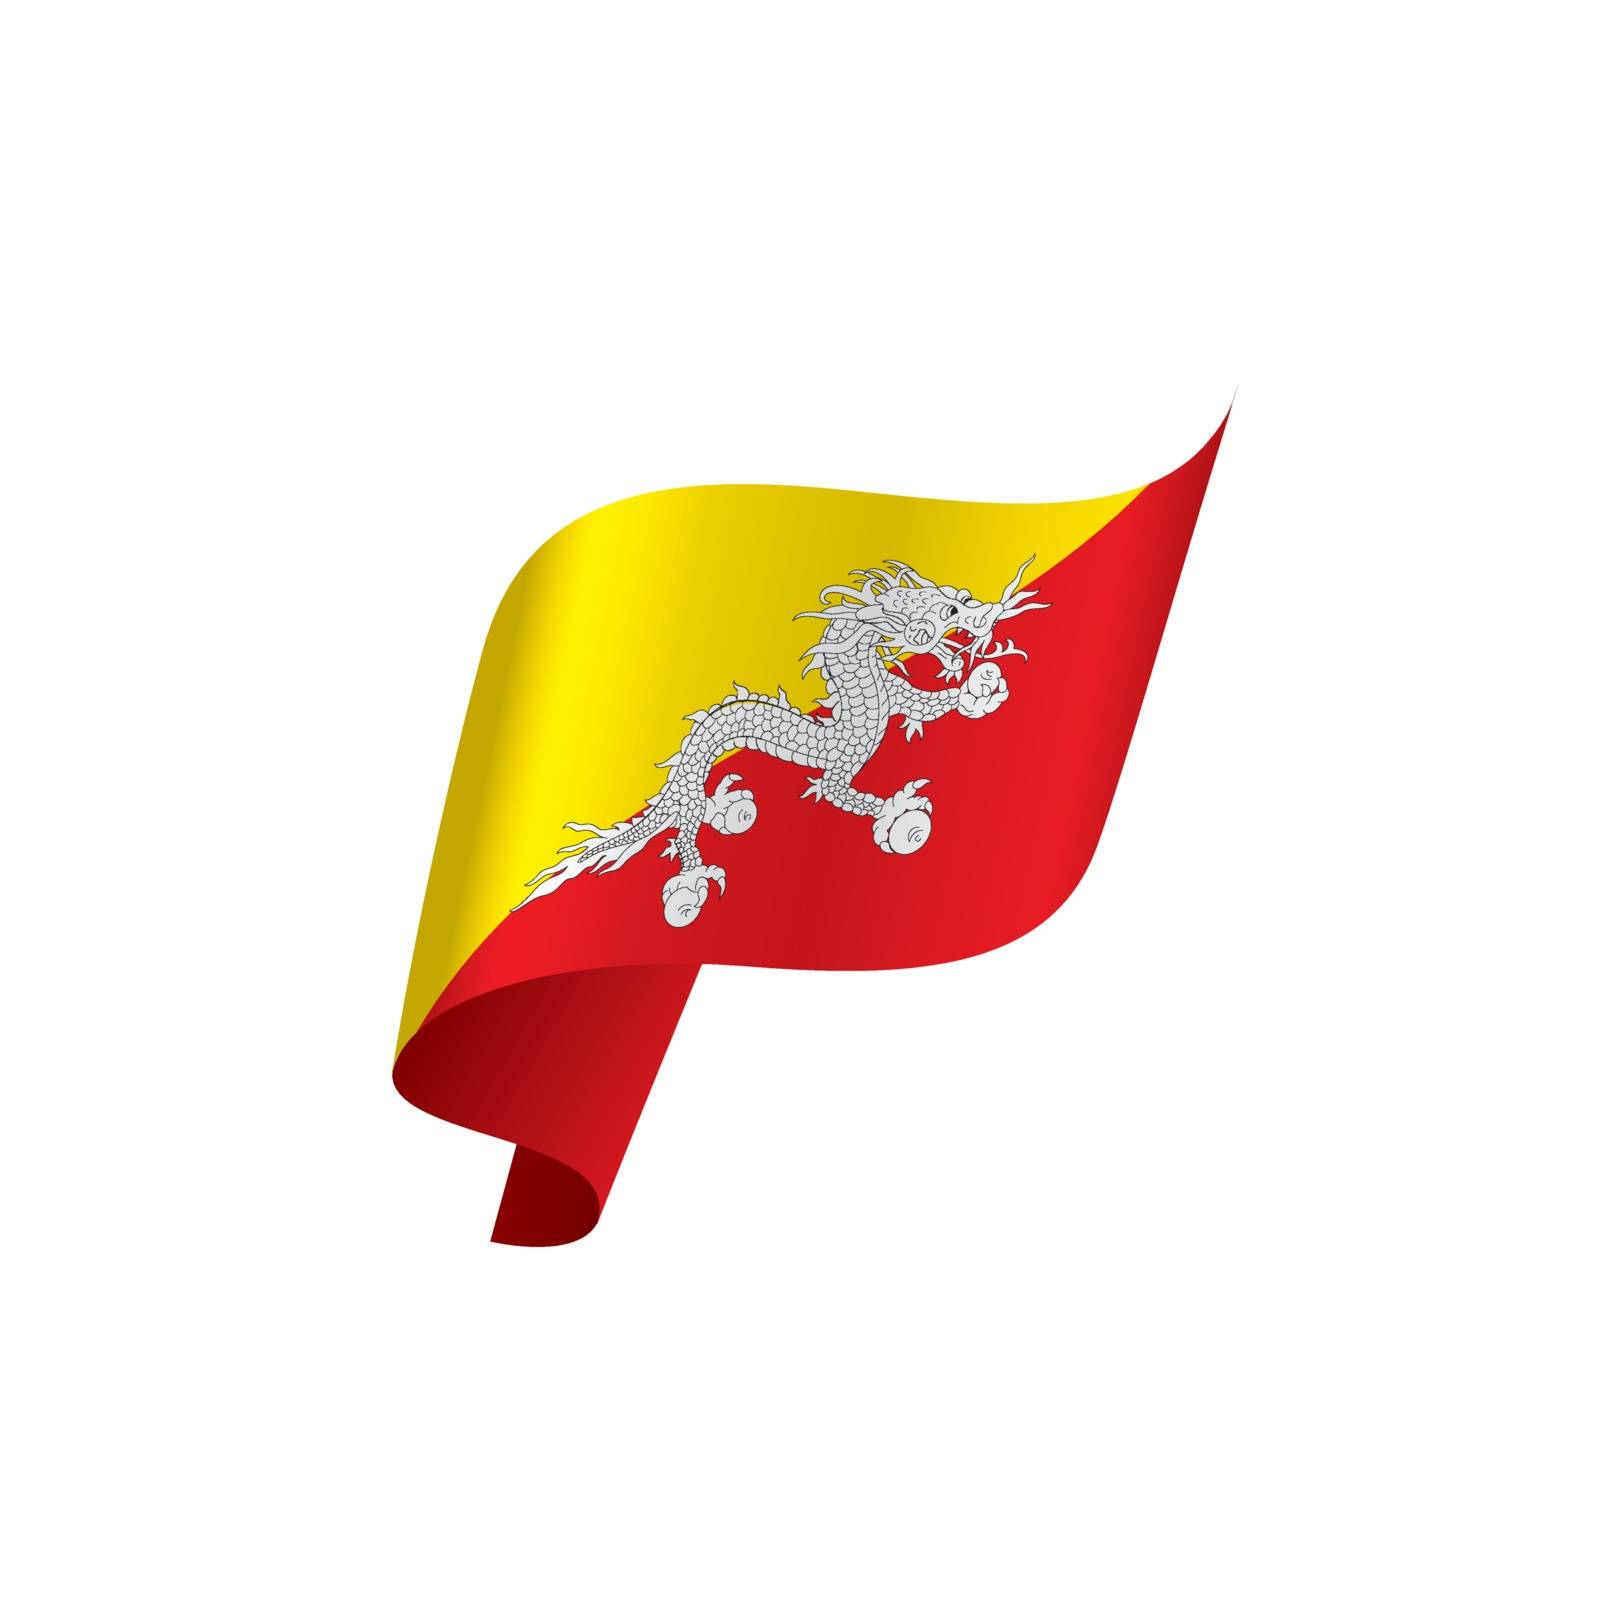 Bhutan flag, vector illustration by butenkow